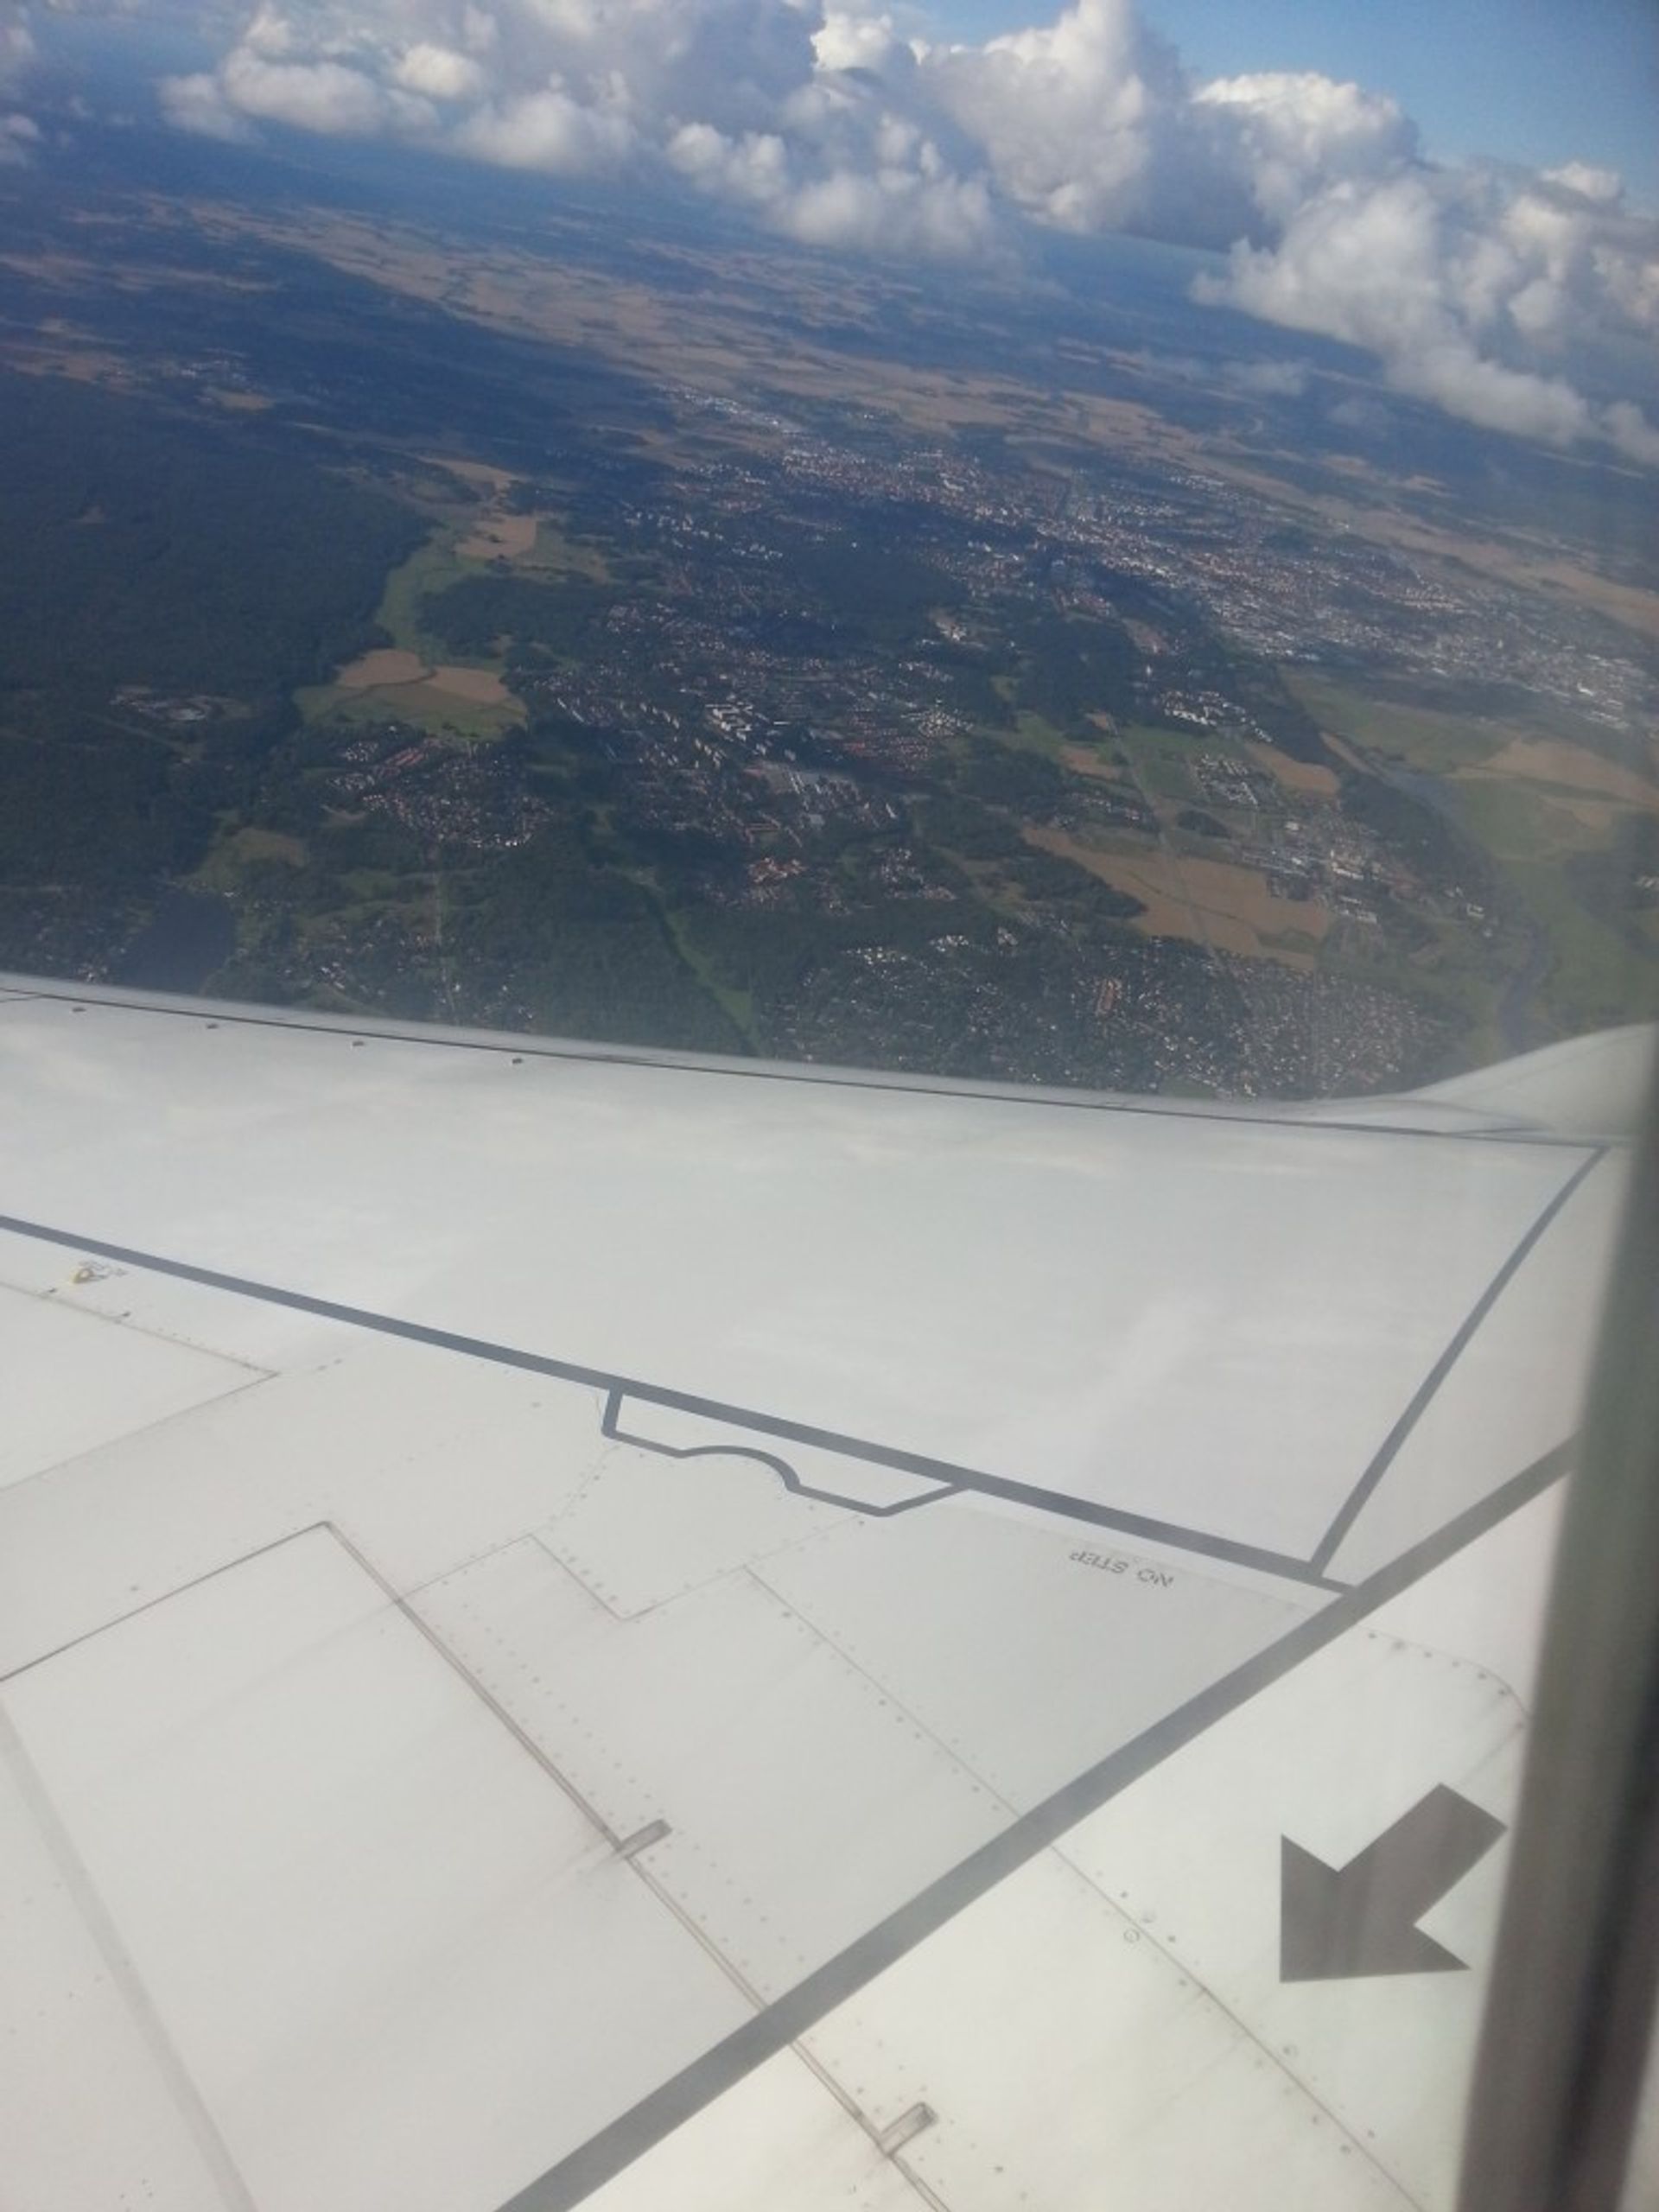 Landing in Stockholm